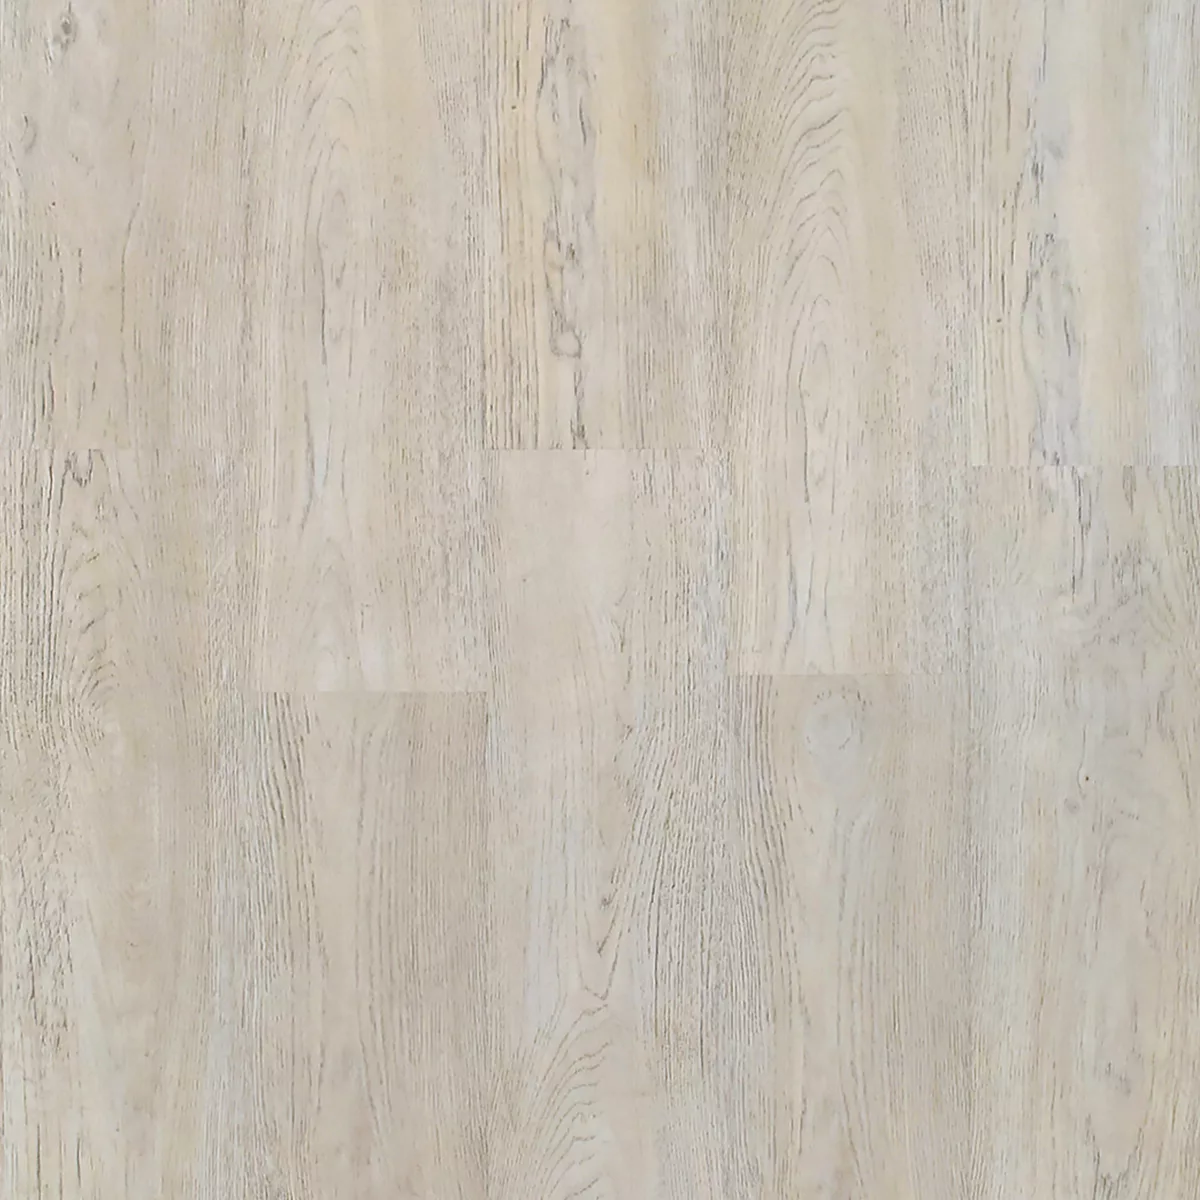 Light Oak Spc flooring in miami florida 22 Mil Wear Layer